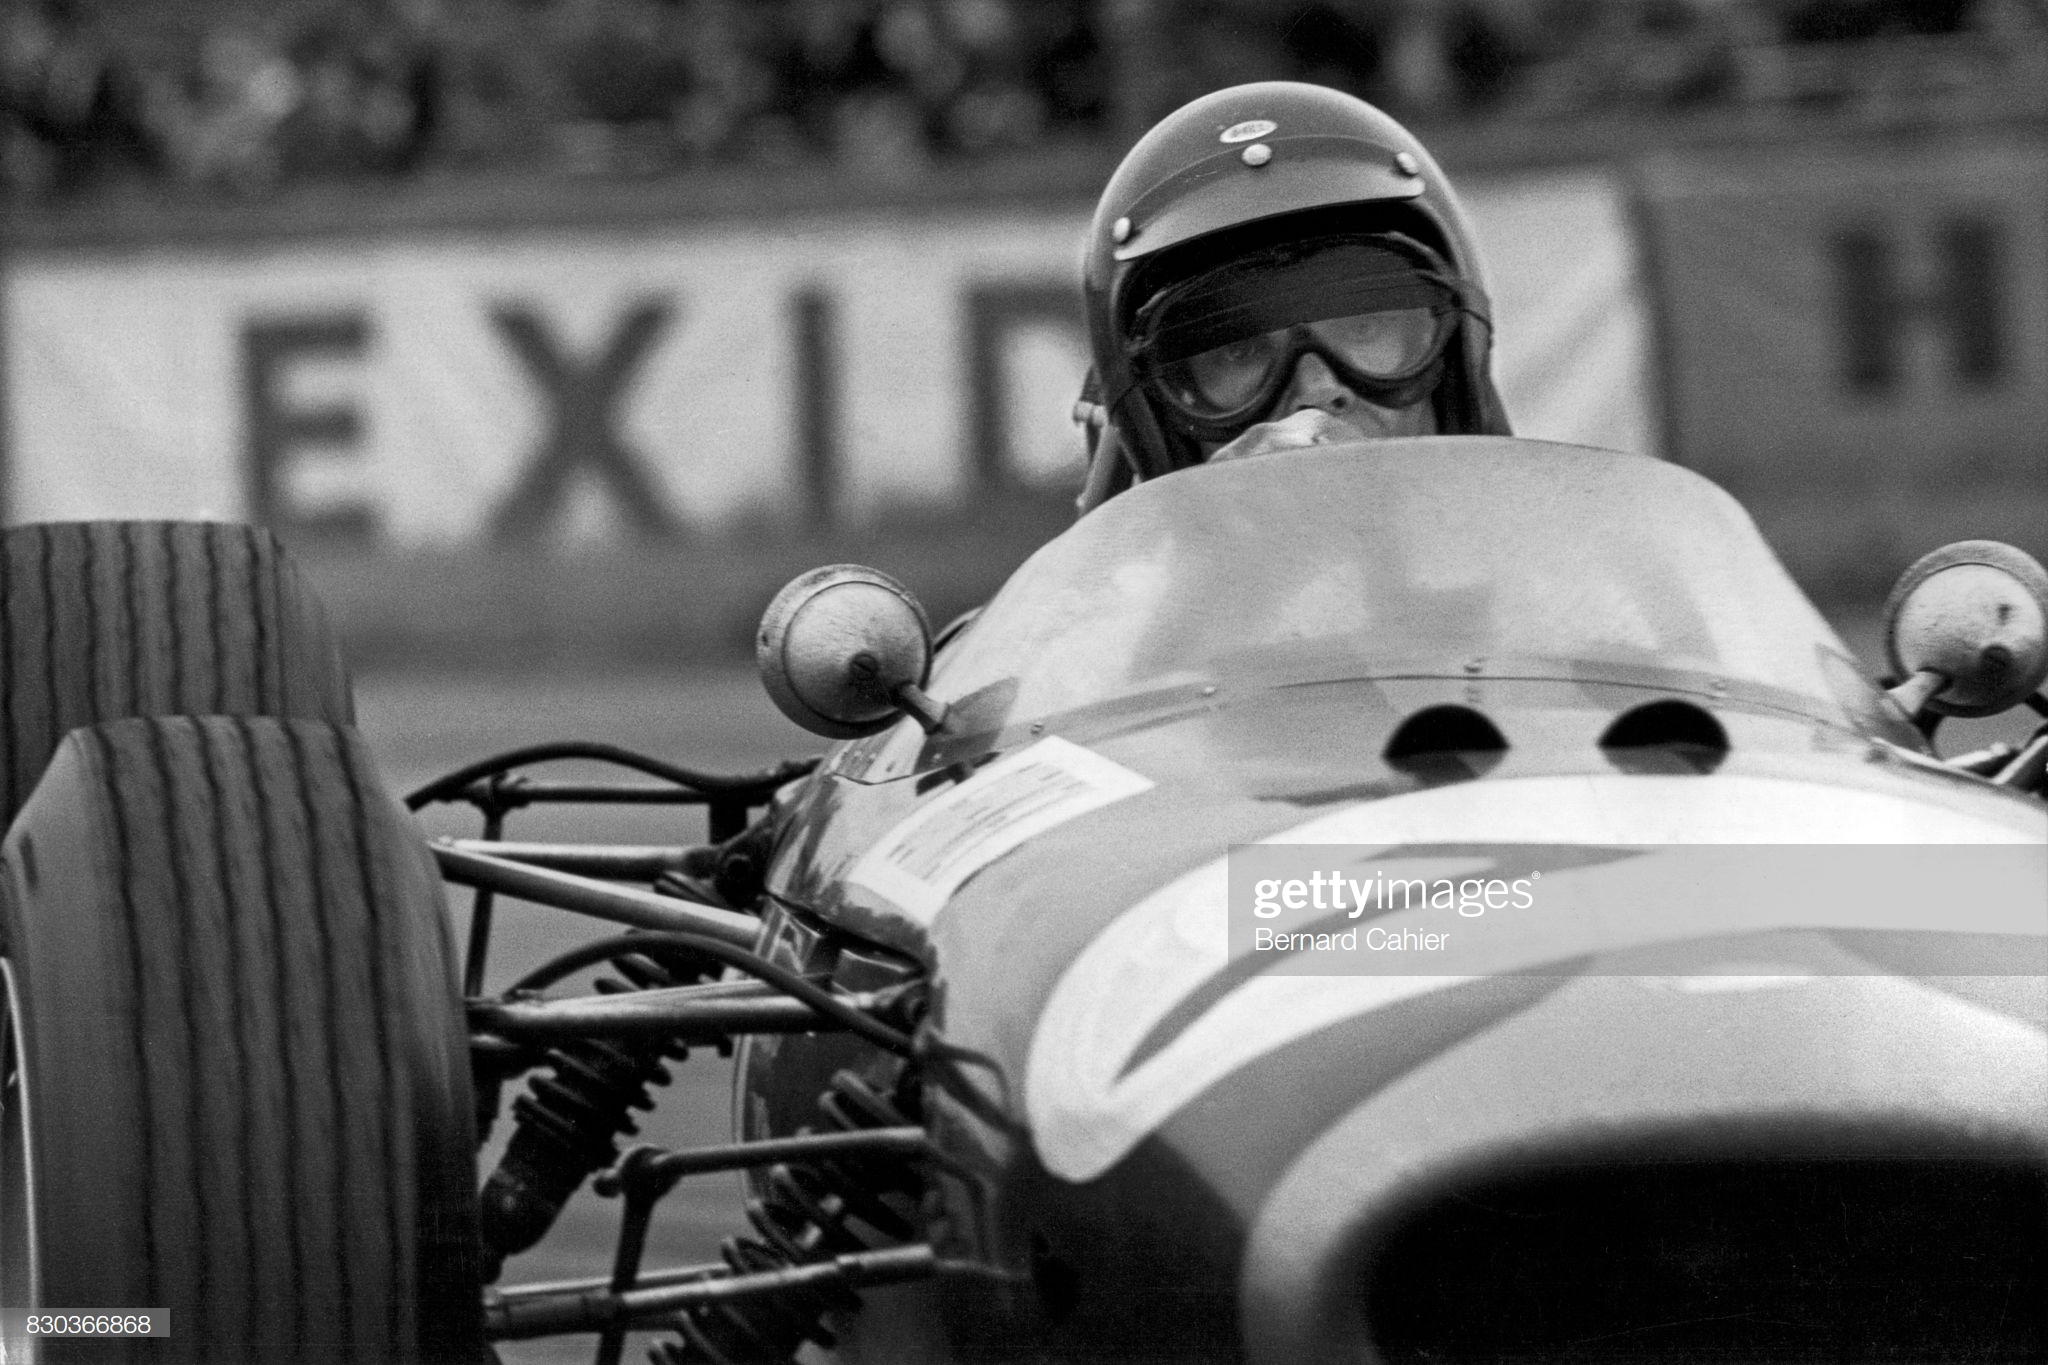 Dan Gurney, Silverstone, 10 July 1965 - Photo by Bernard Cahier/Getty Images